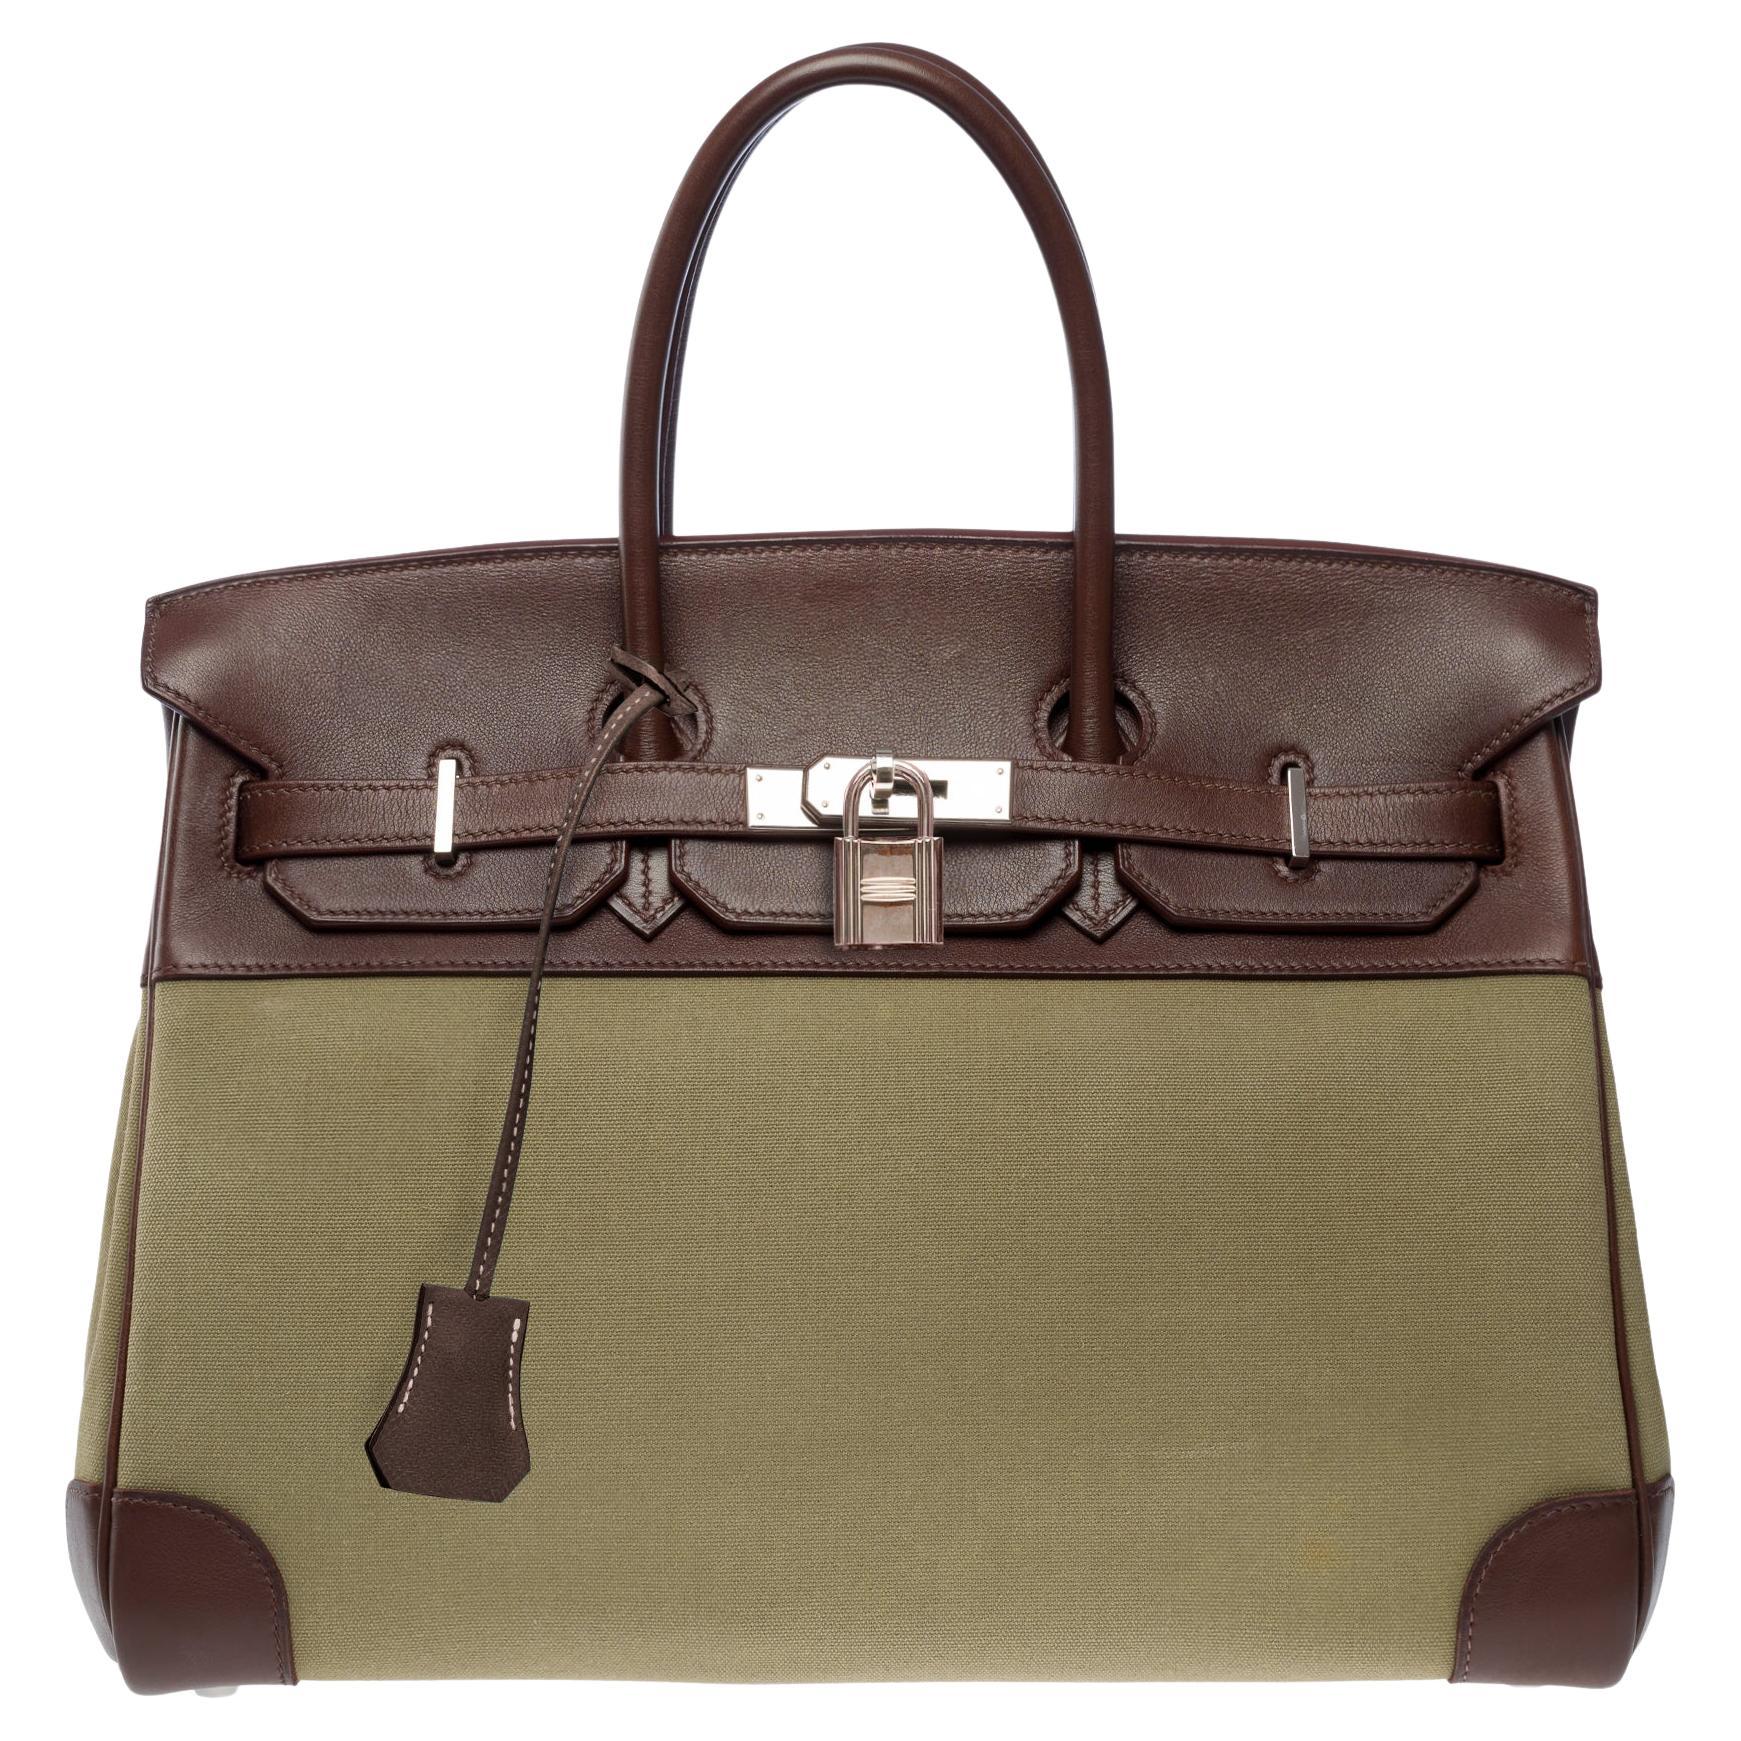 Fantastic Hermès Birkin 35 handbag in brown swift leather & khaki Canvas, SHW